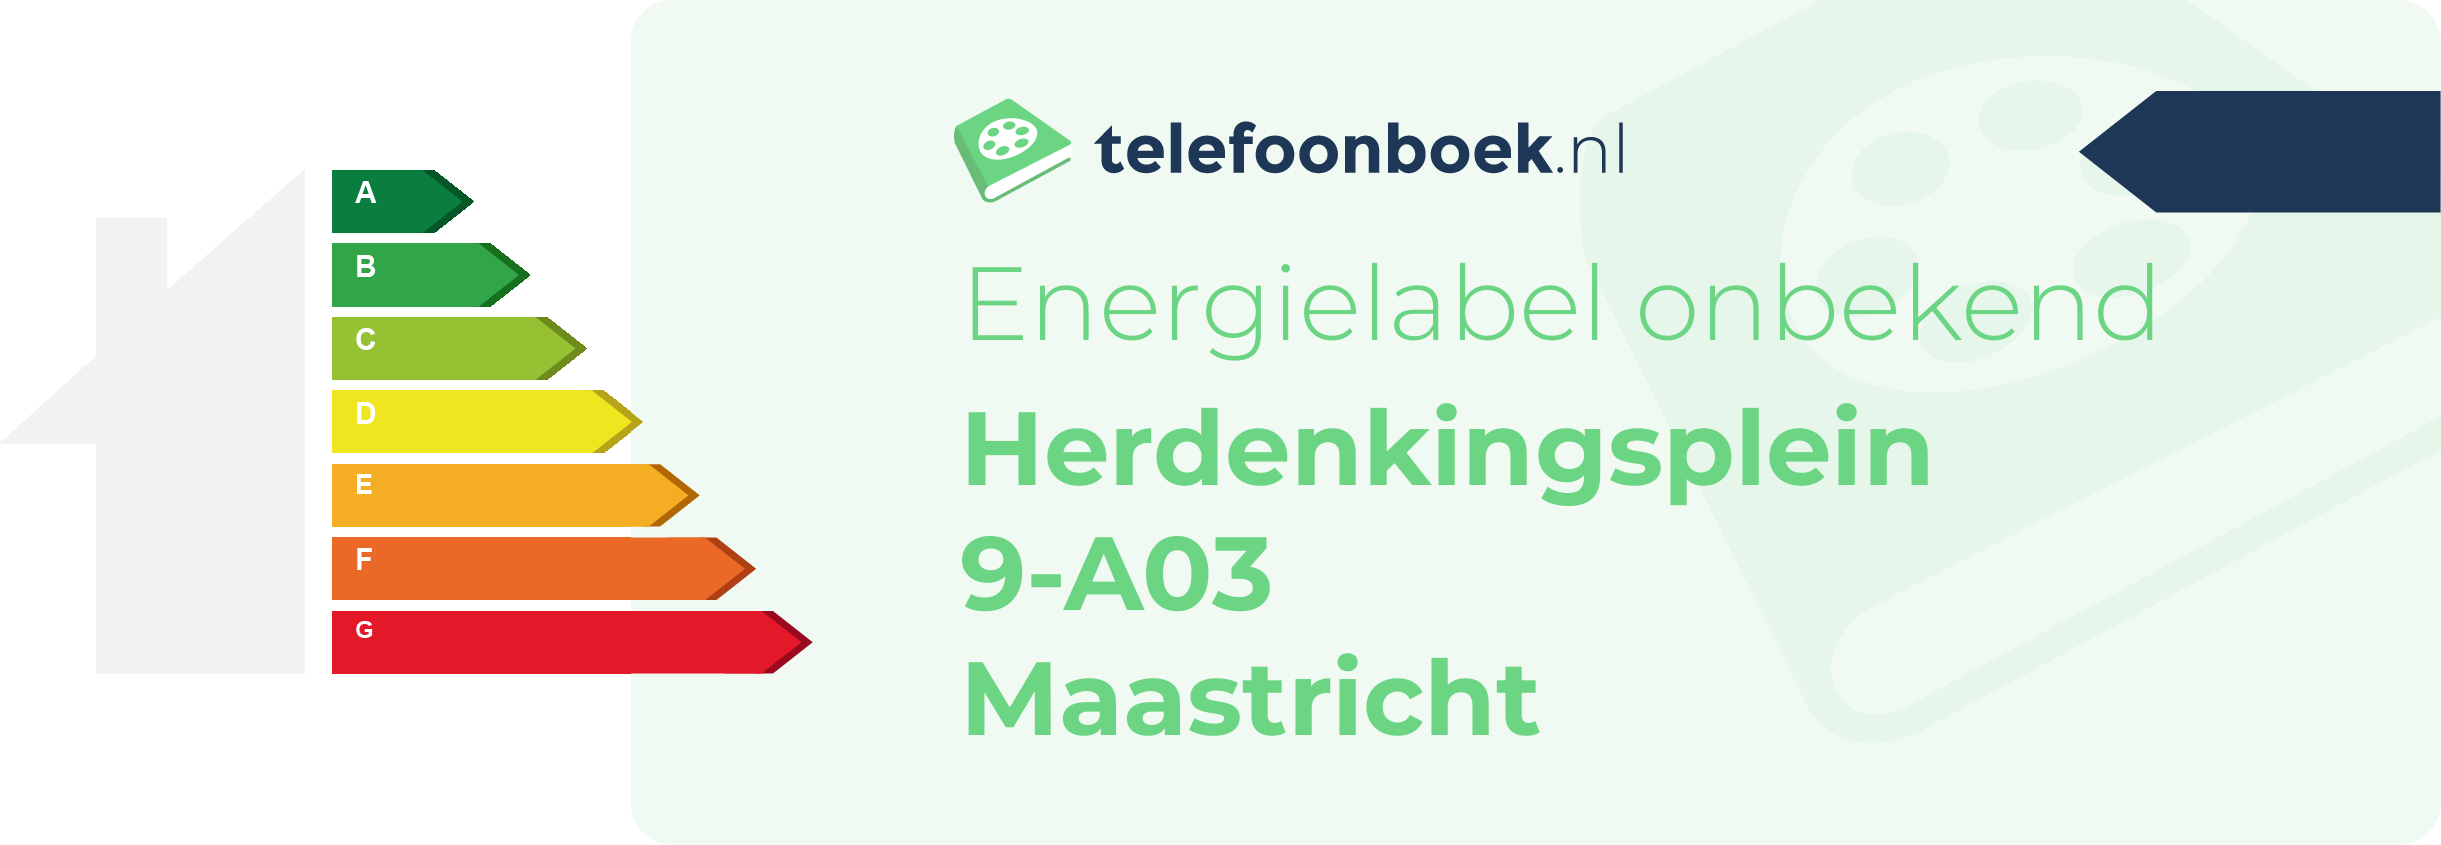 Energielabel Herdenkingsplein 9-A03 Maastricht